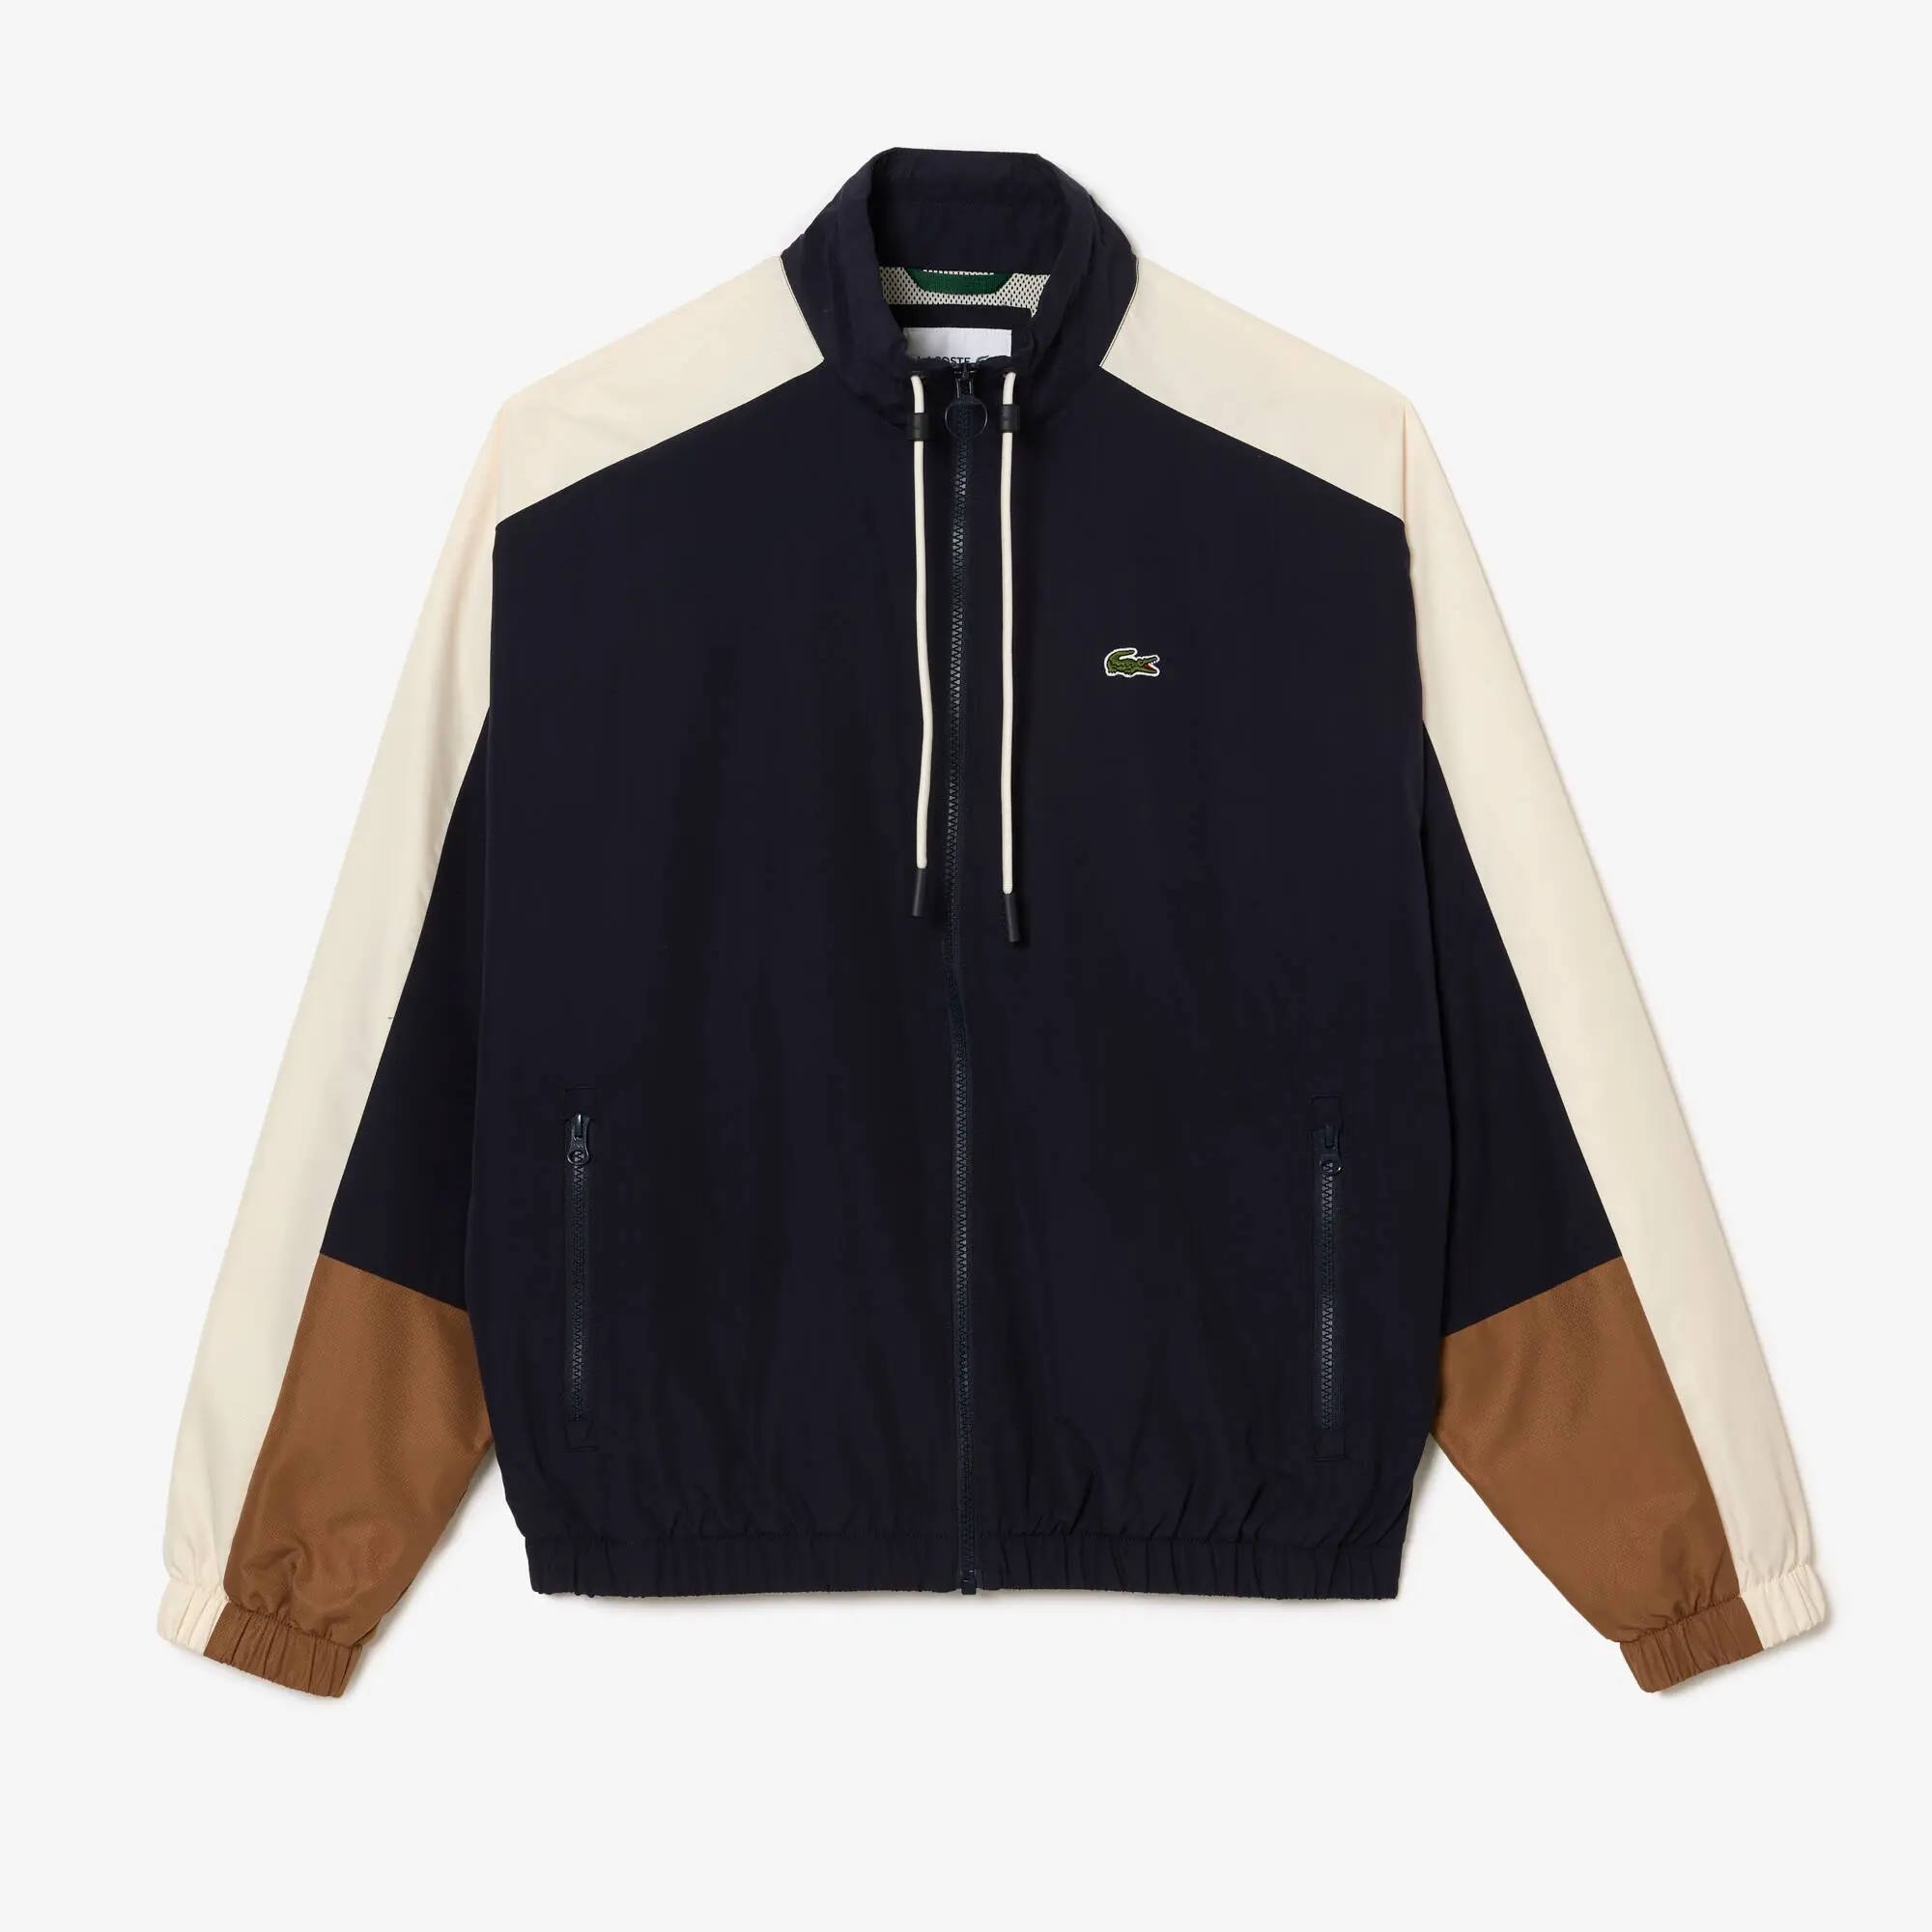 Lacoste Water Resistant Colourblock Zipped Sportsuit Jacket. 2